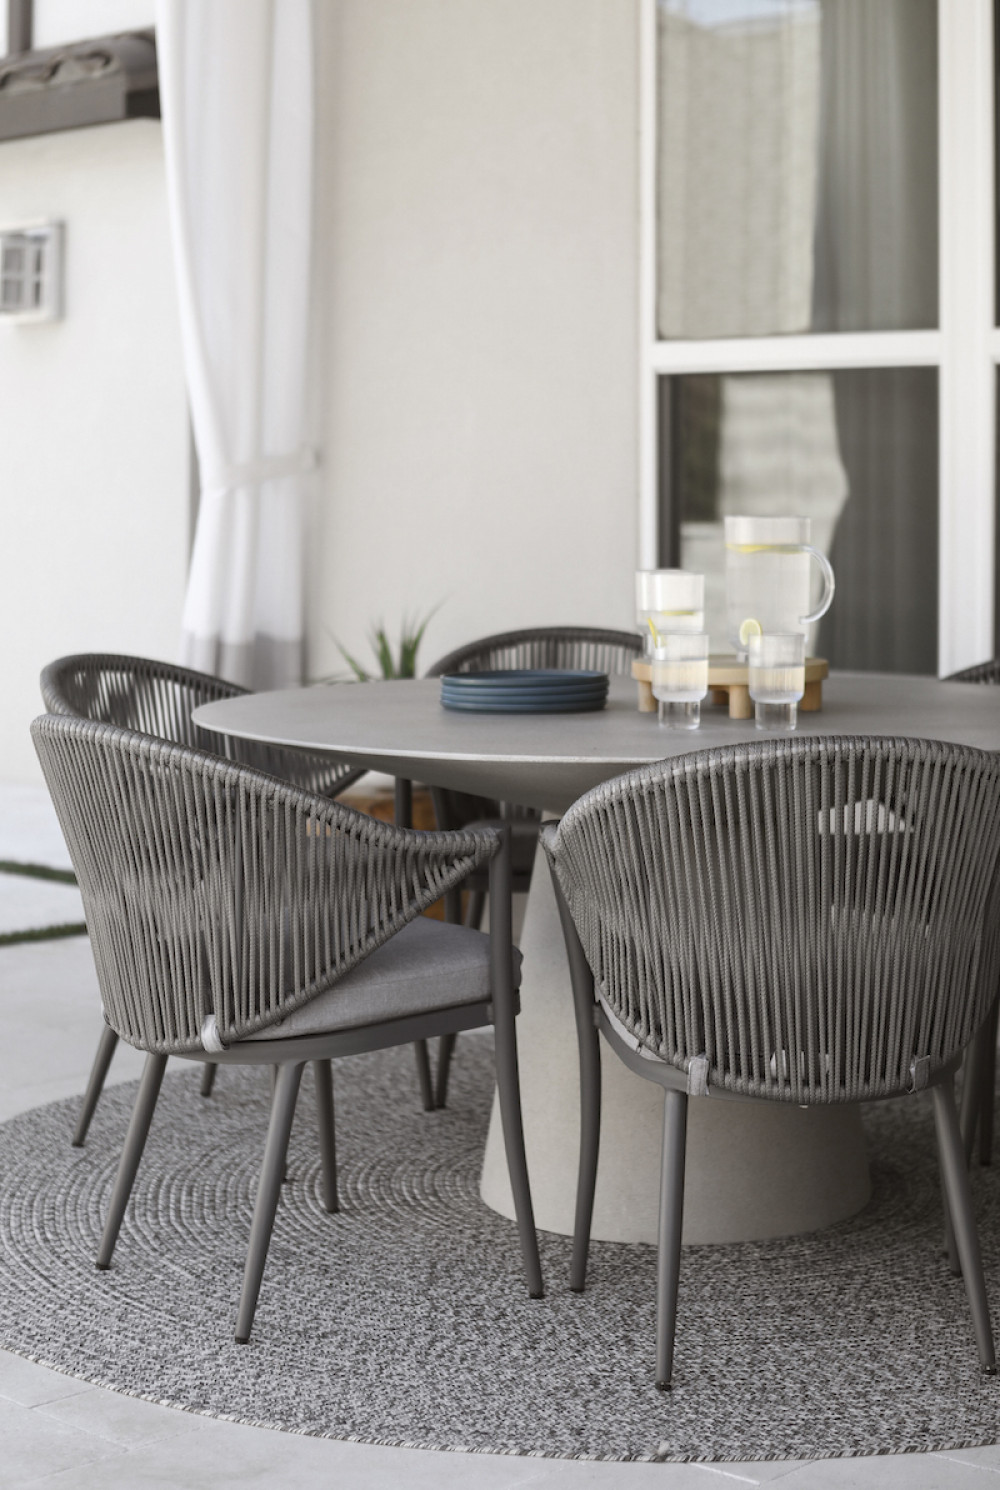 patio-table-exterior-furniture-frisco-tx